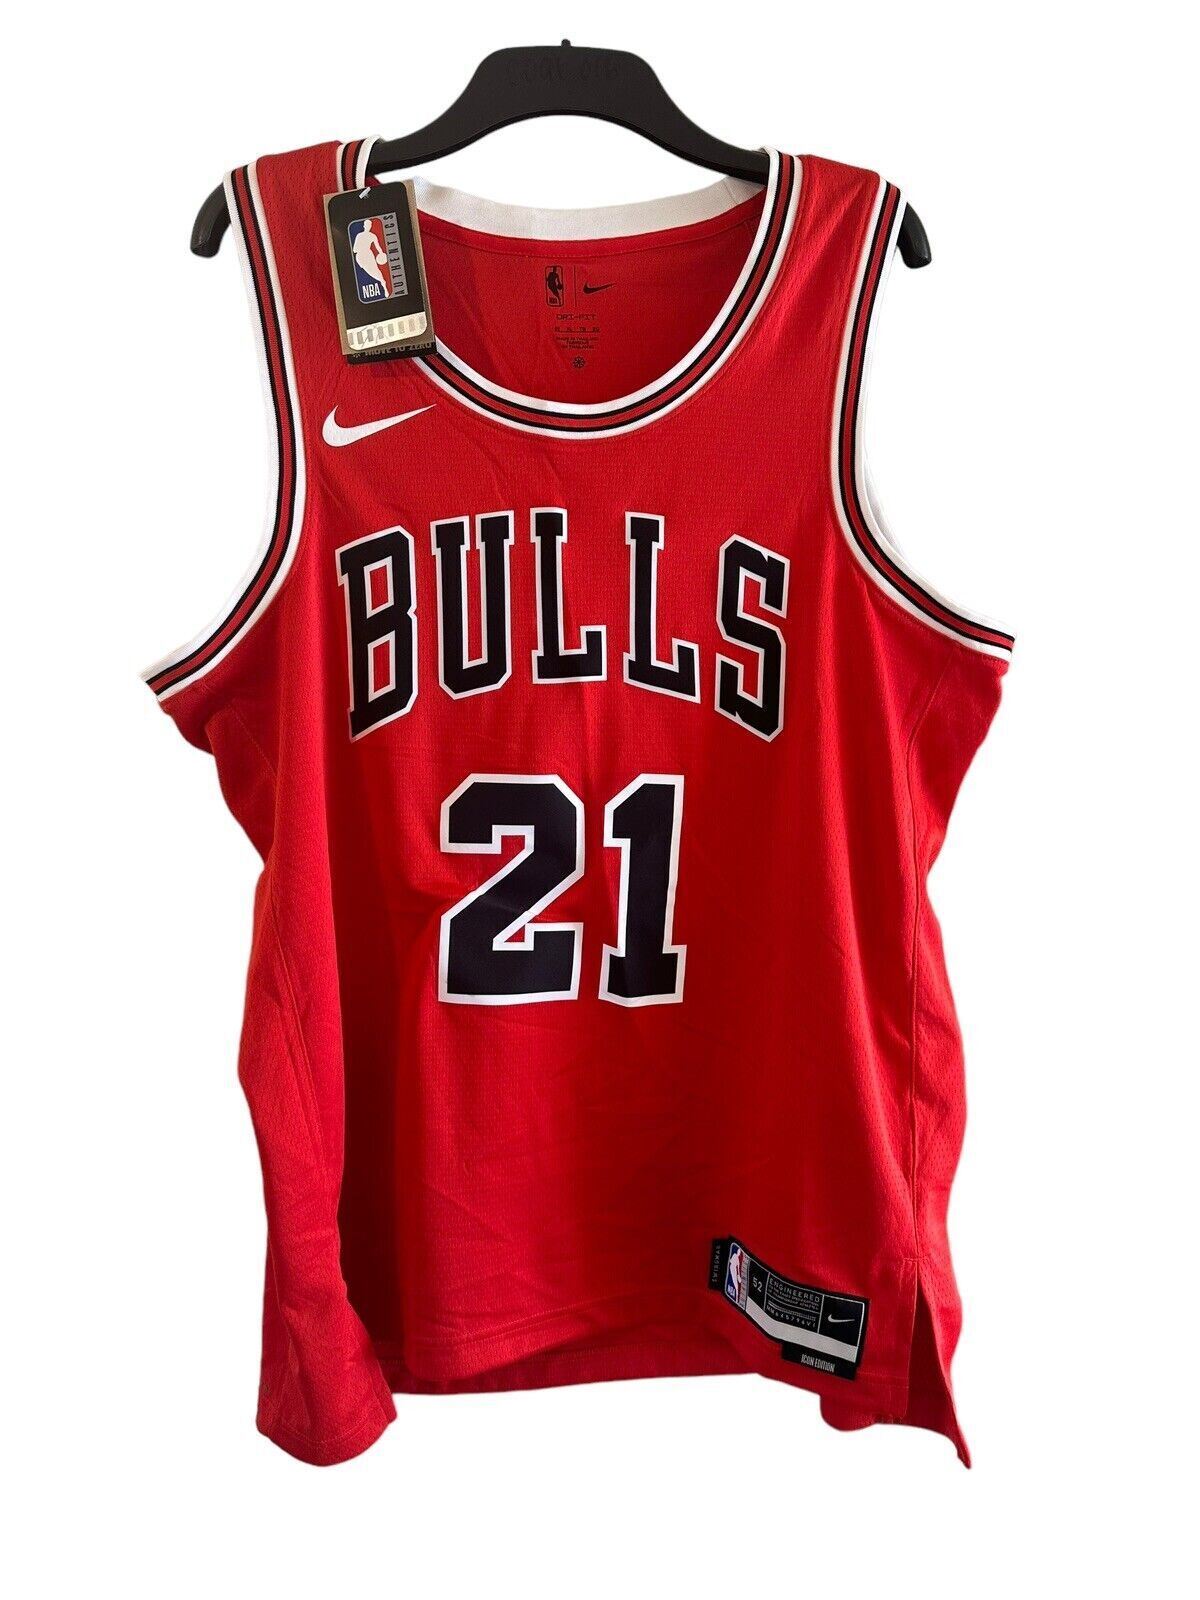 Nike NBA Chicago Bulls Icon Edition Jersey Basketball Mens XL *DF*